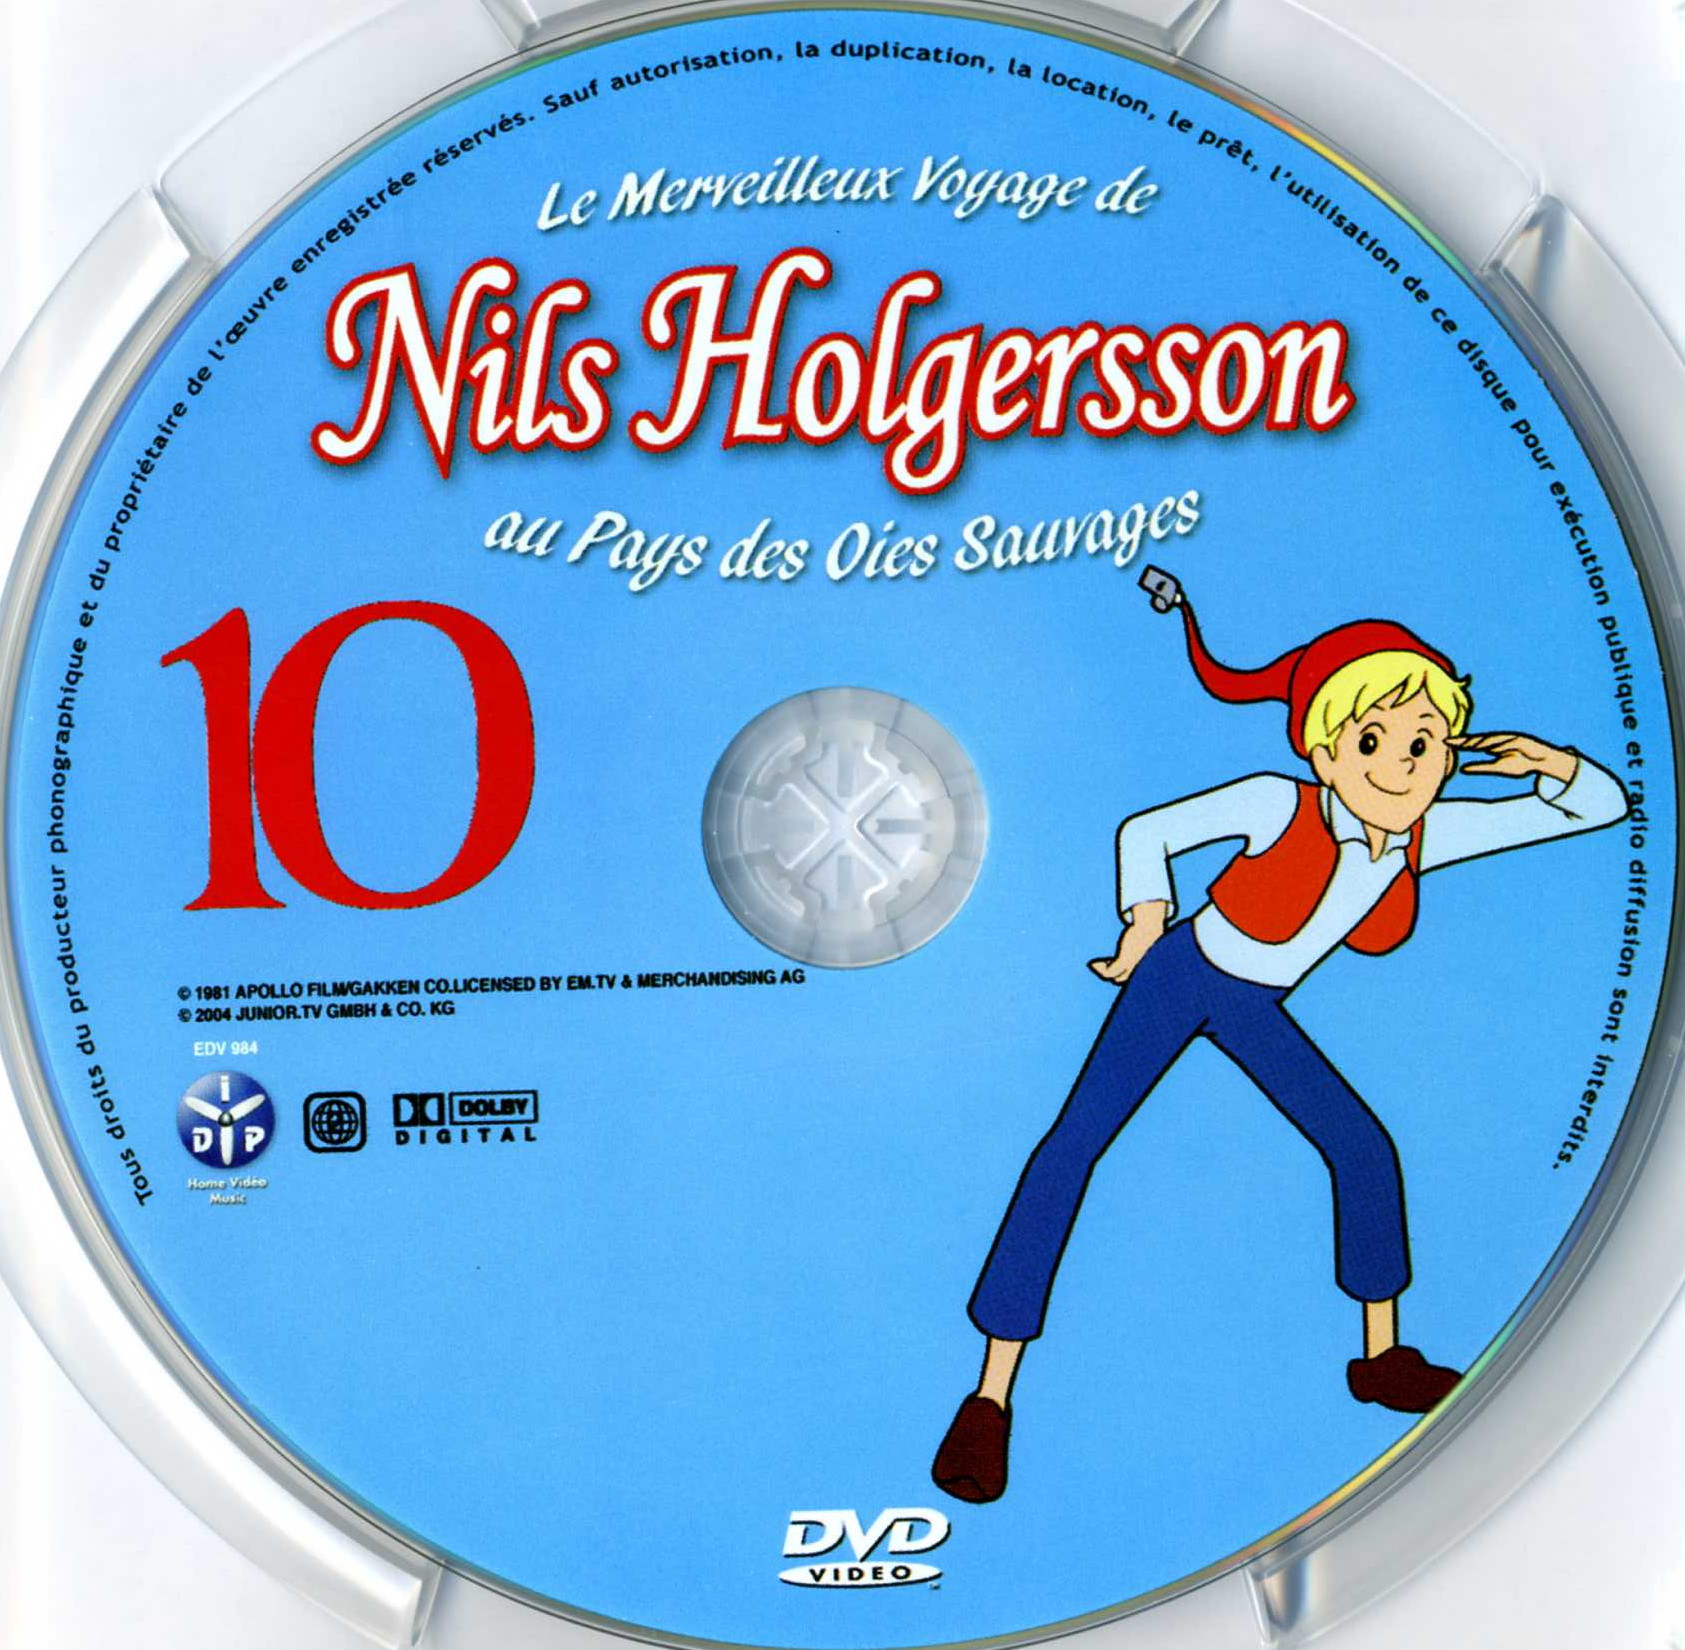 Nils Holgersson vol 10